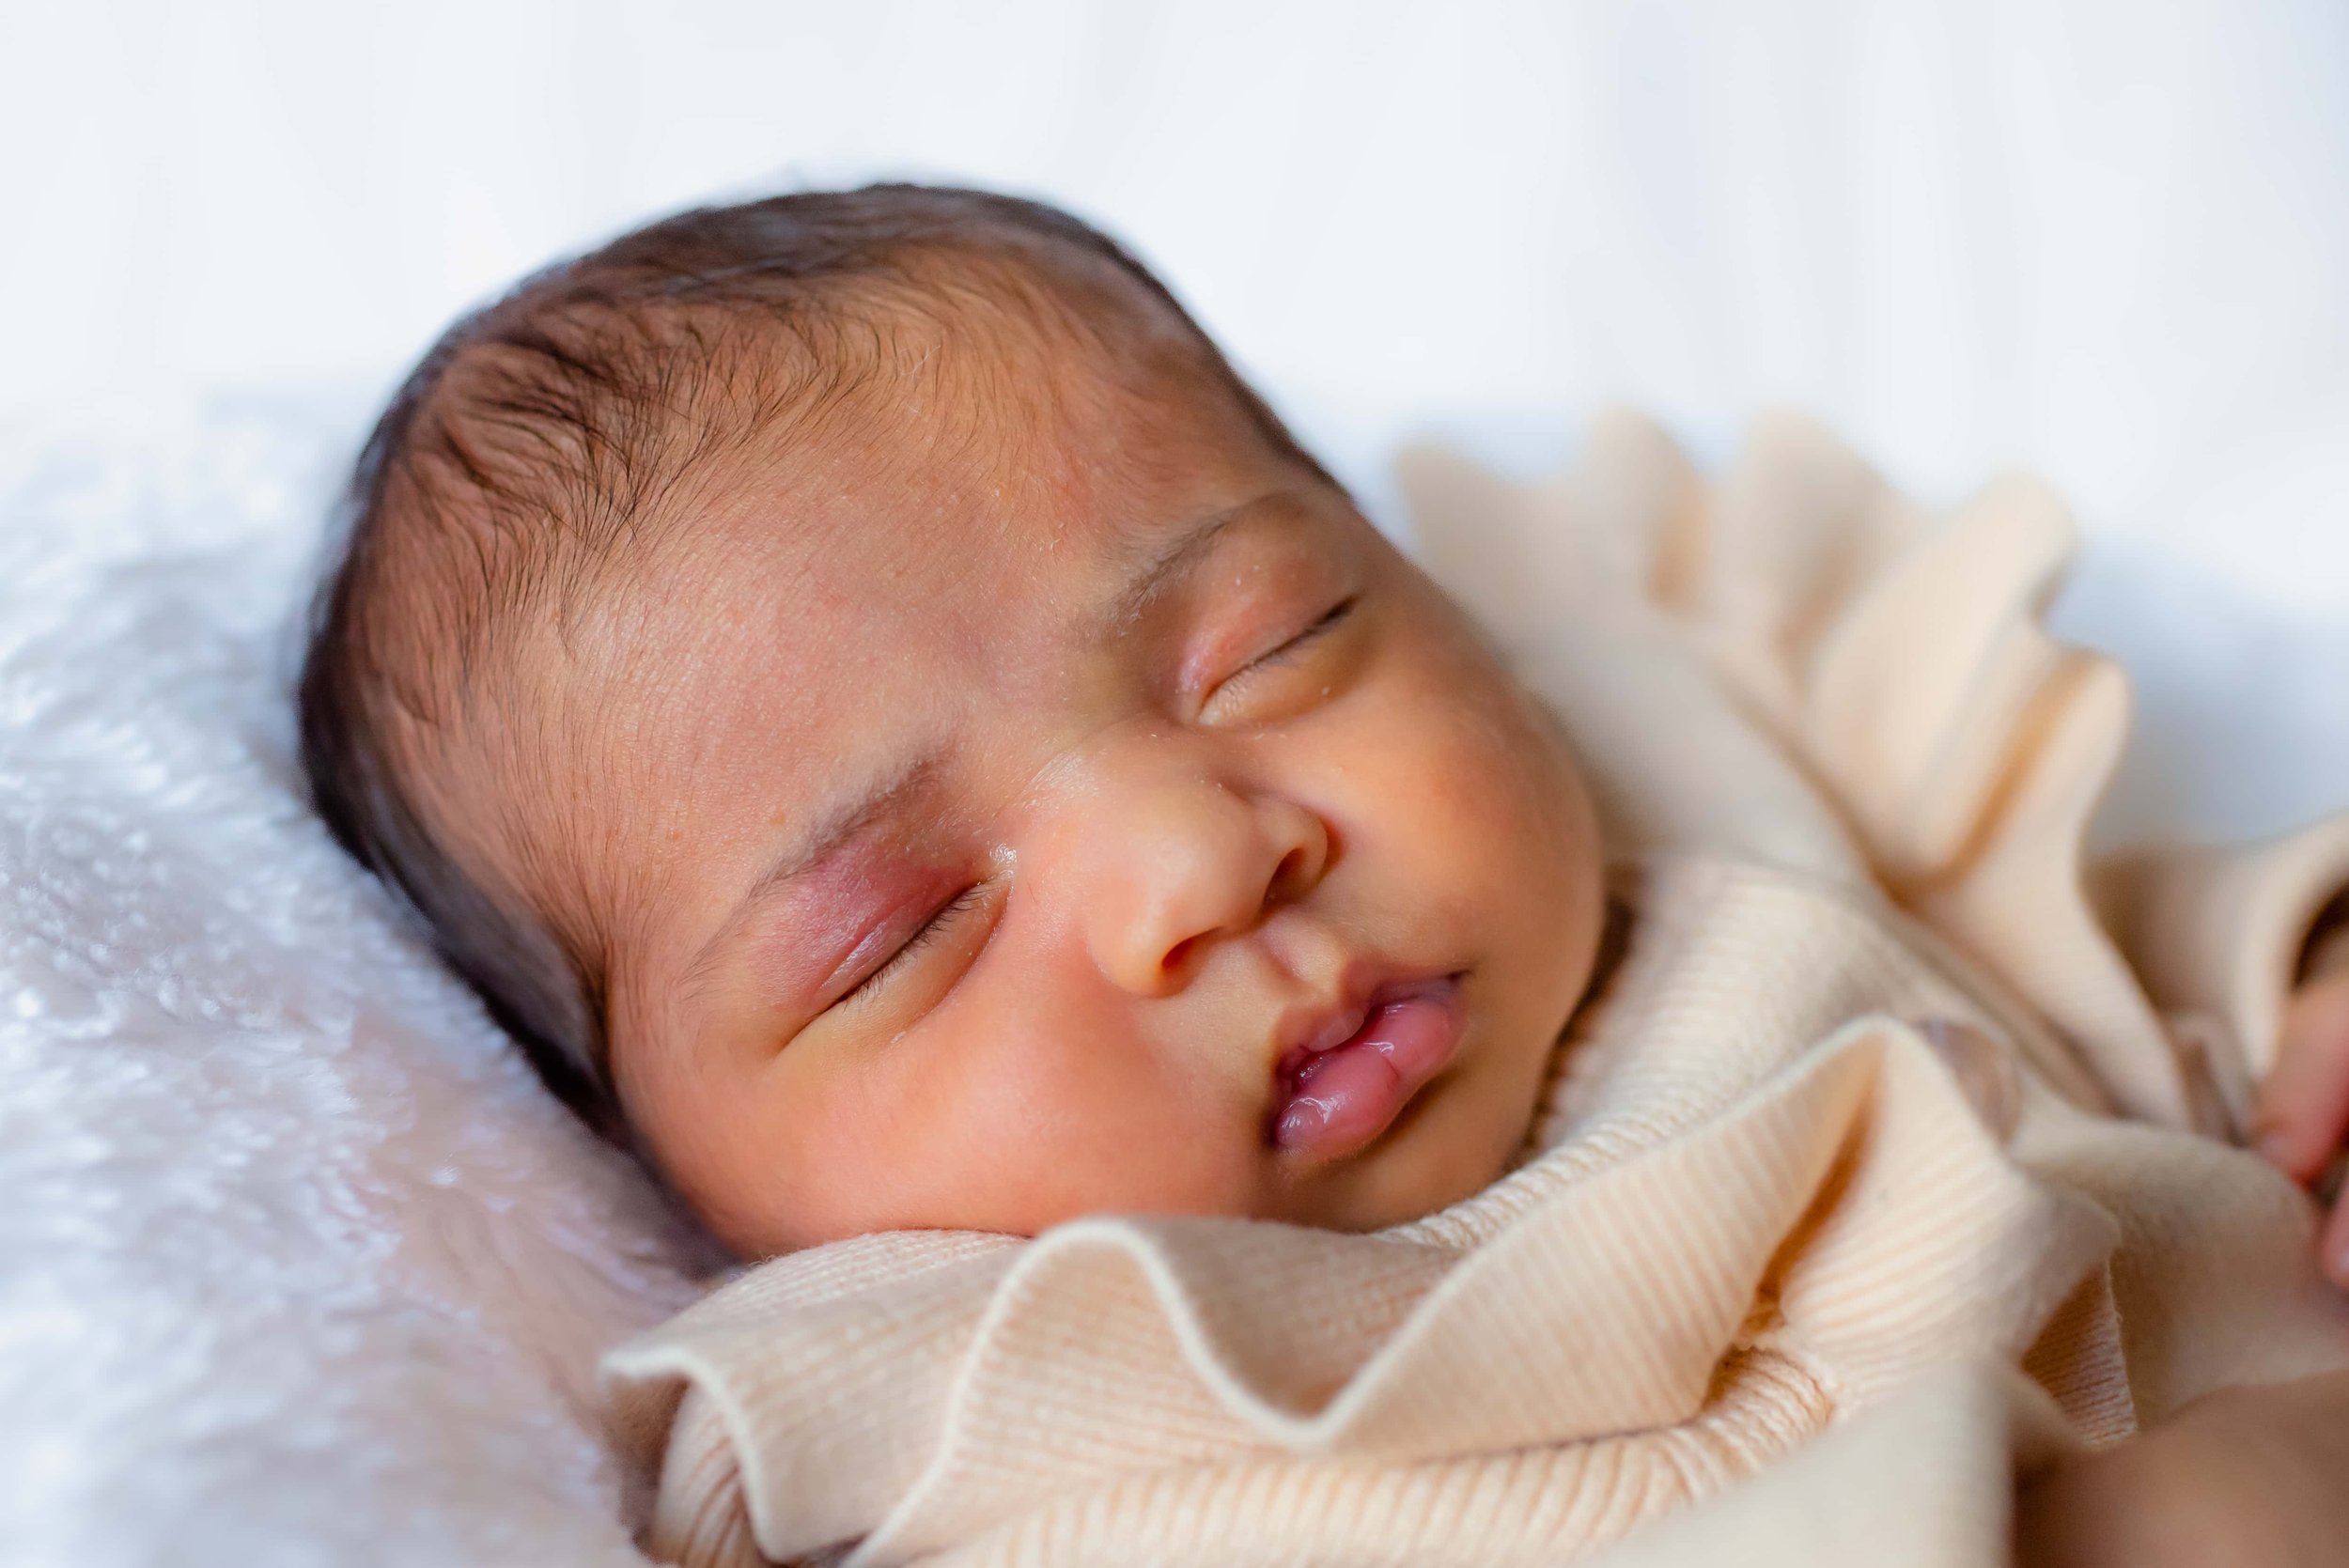 Maryland Newborn Photographer - close-up of sleeping baby 